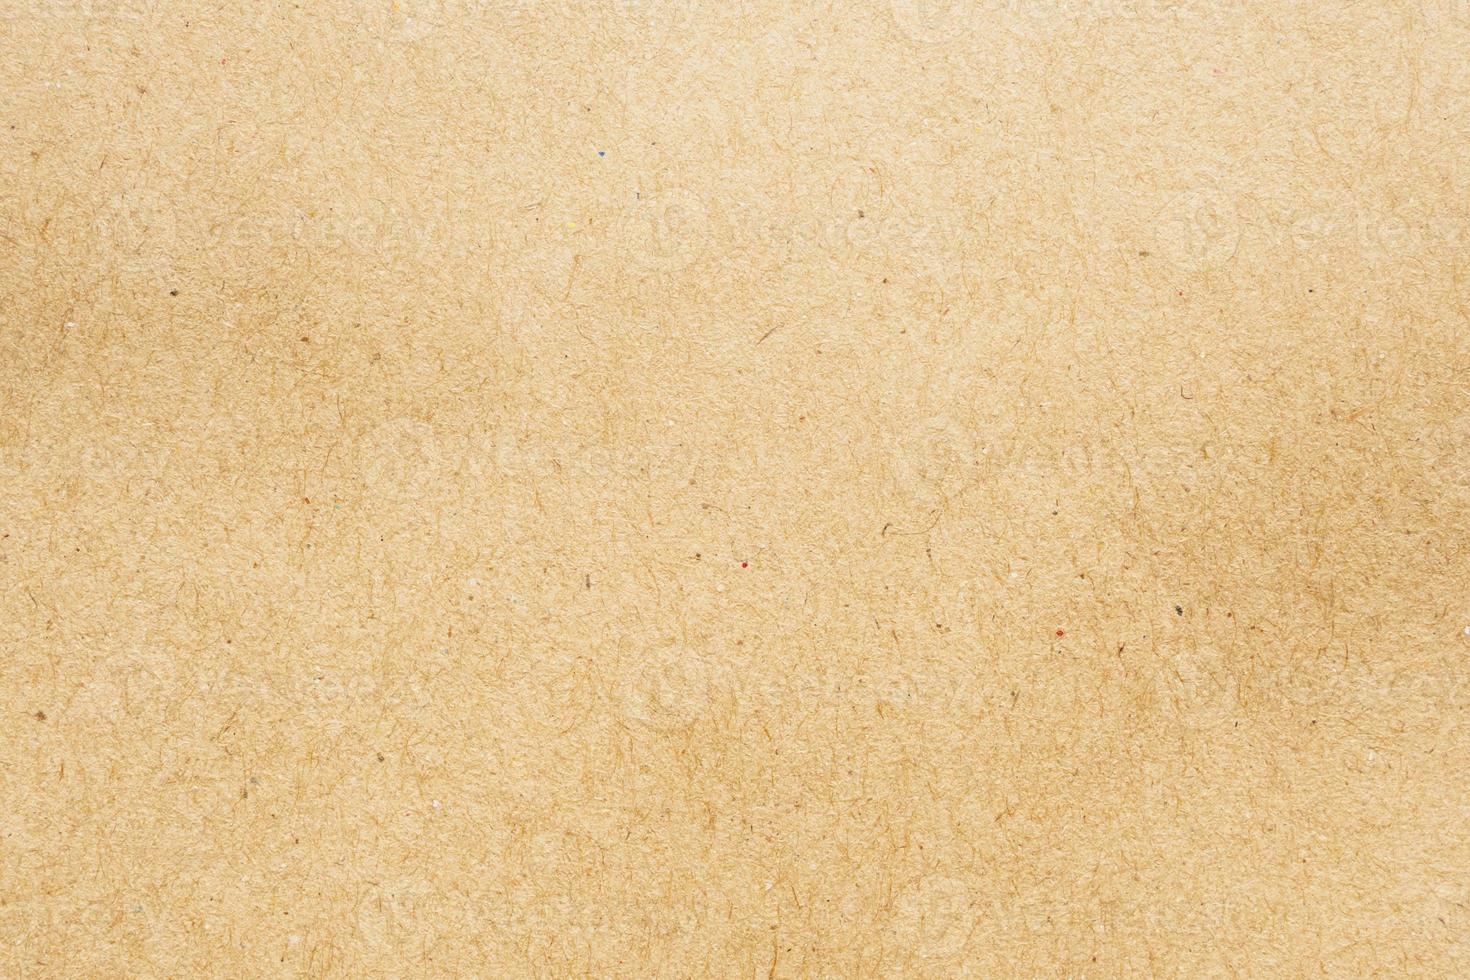 Texture Brown Craft Kraft Paper Background Cardboard Sheet Recycle